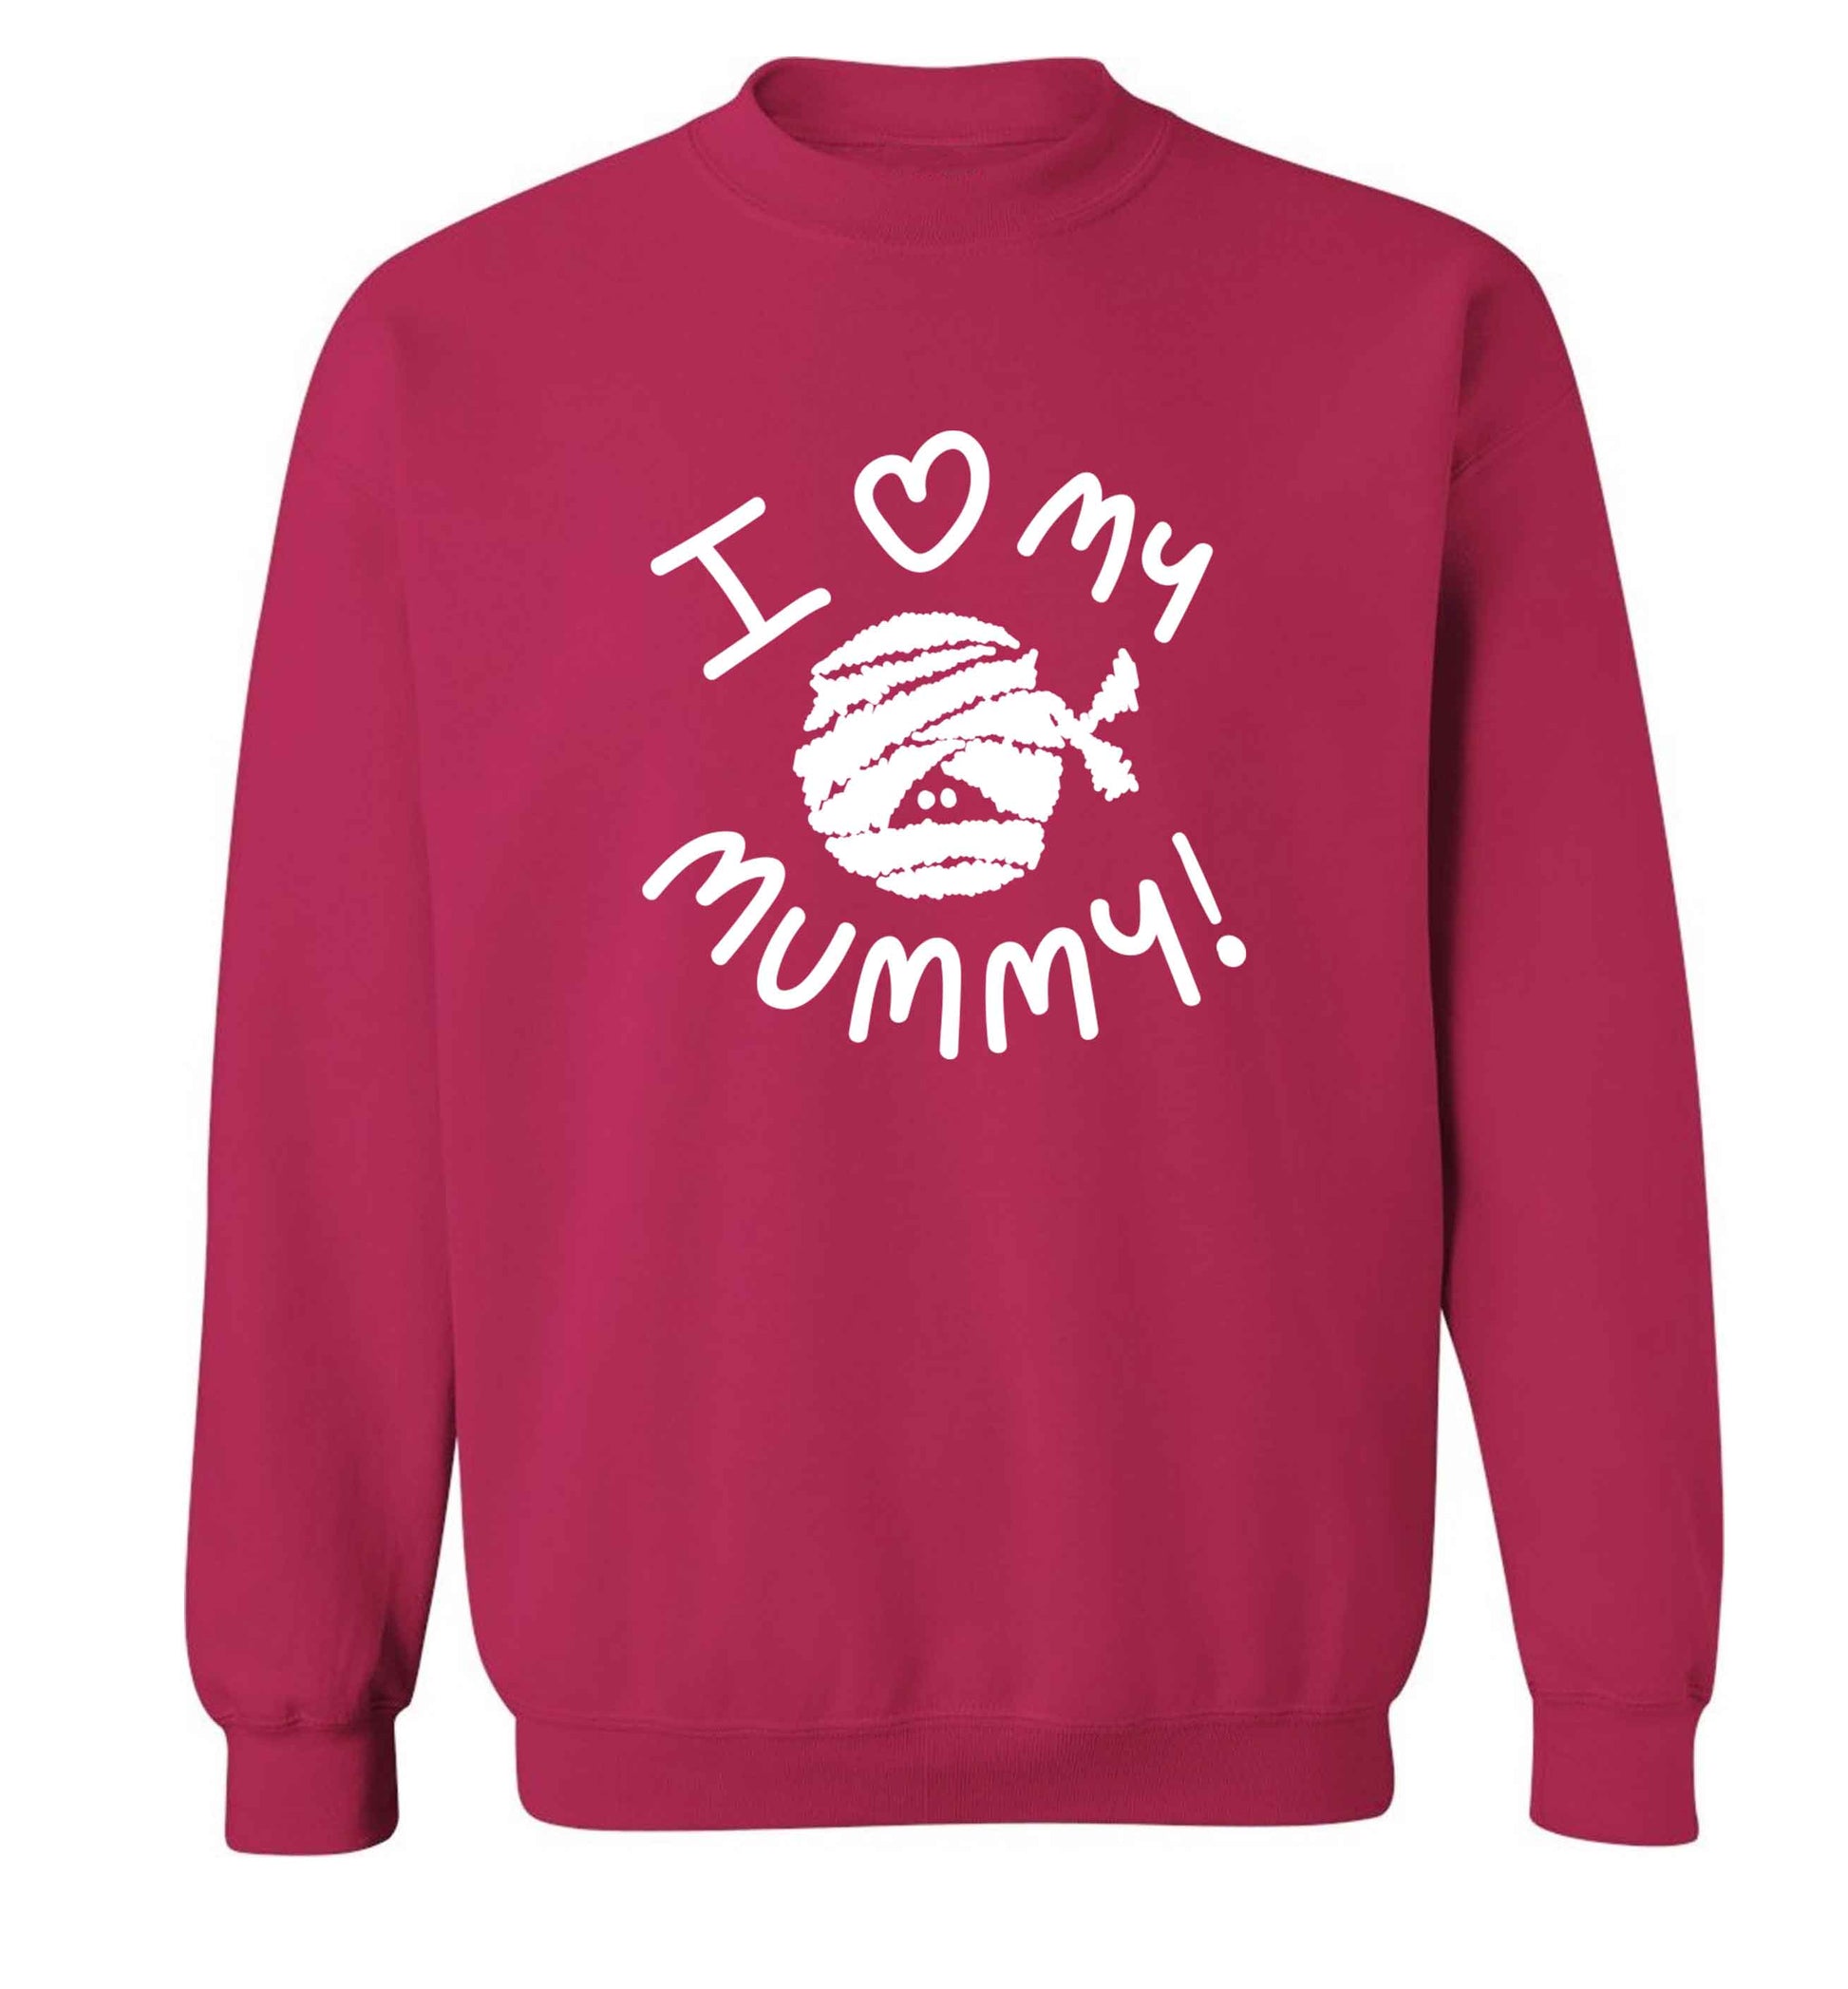 I love my mummy halloween pun adult's unisex pink sweater 2XL